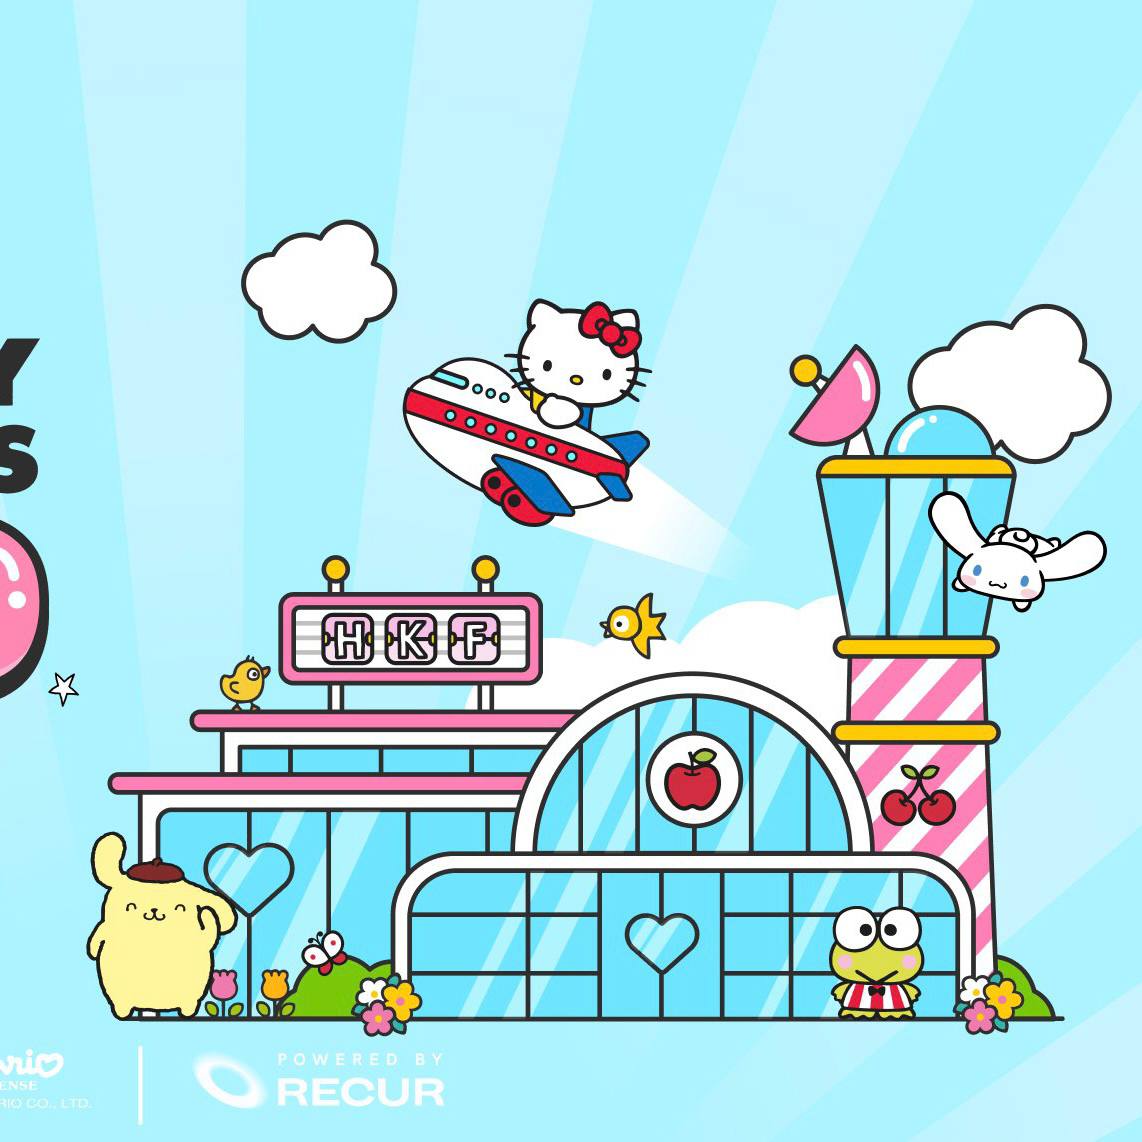 The Adventures of Hello Kitty & Friends - Season One Photo 02